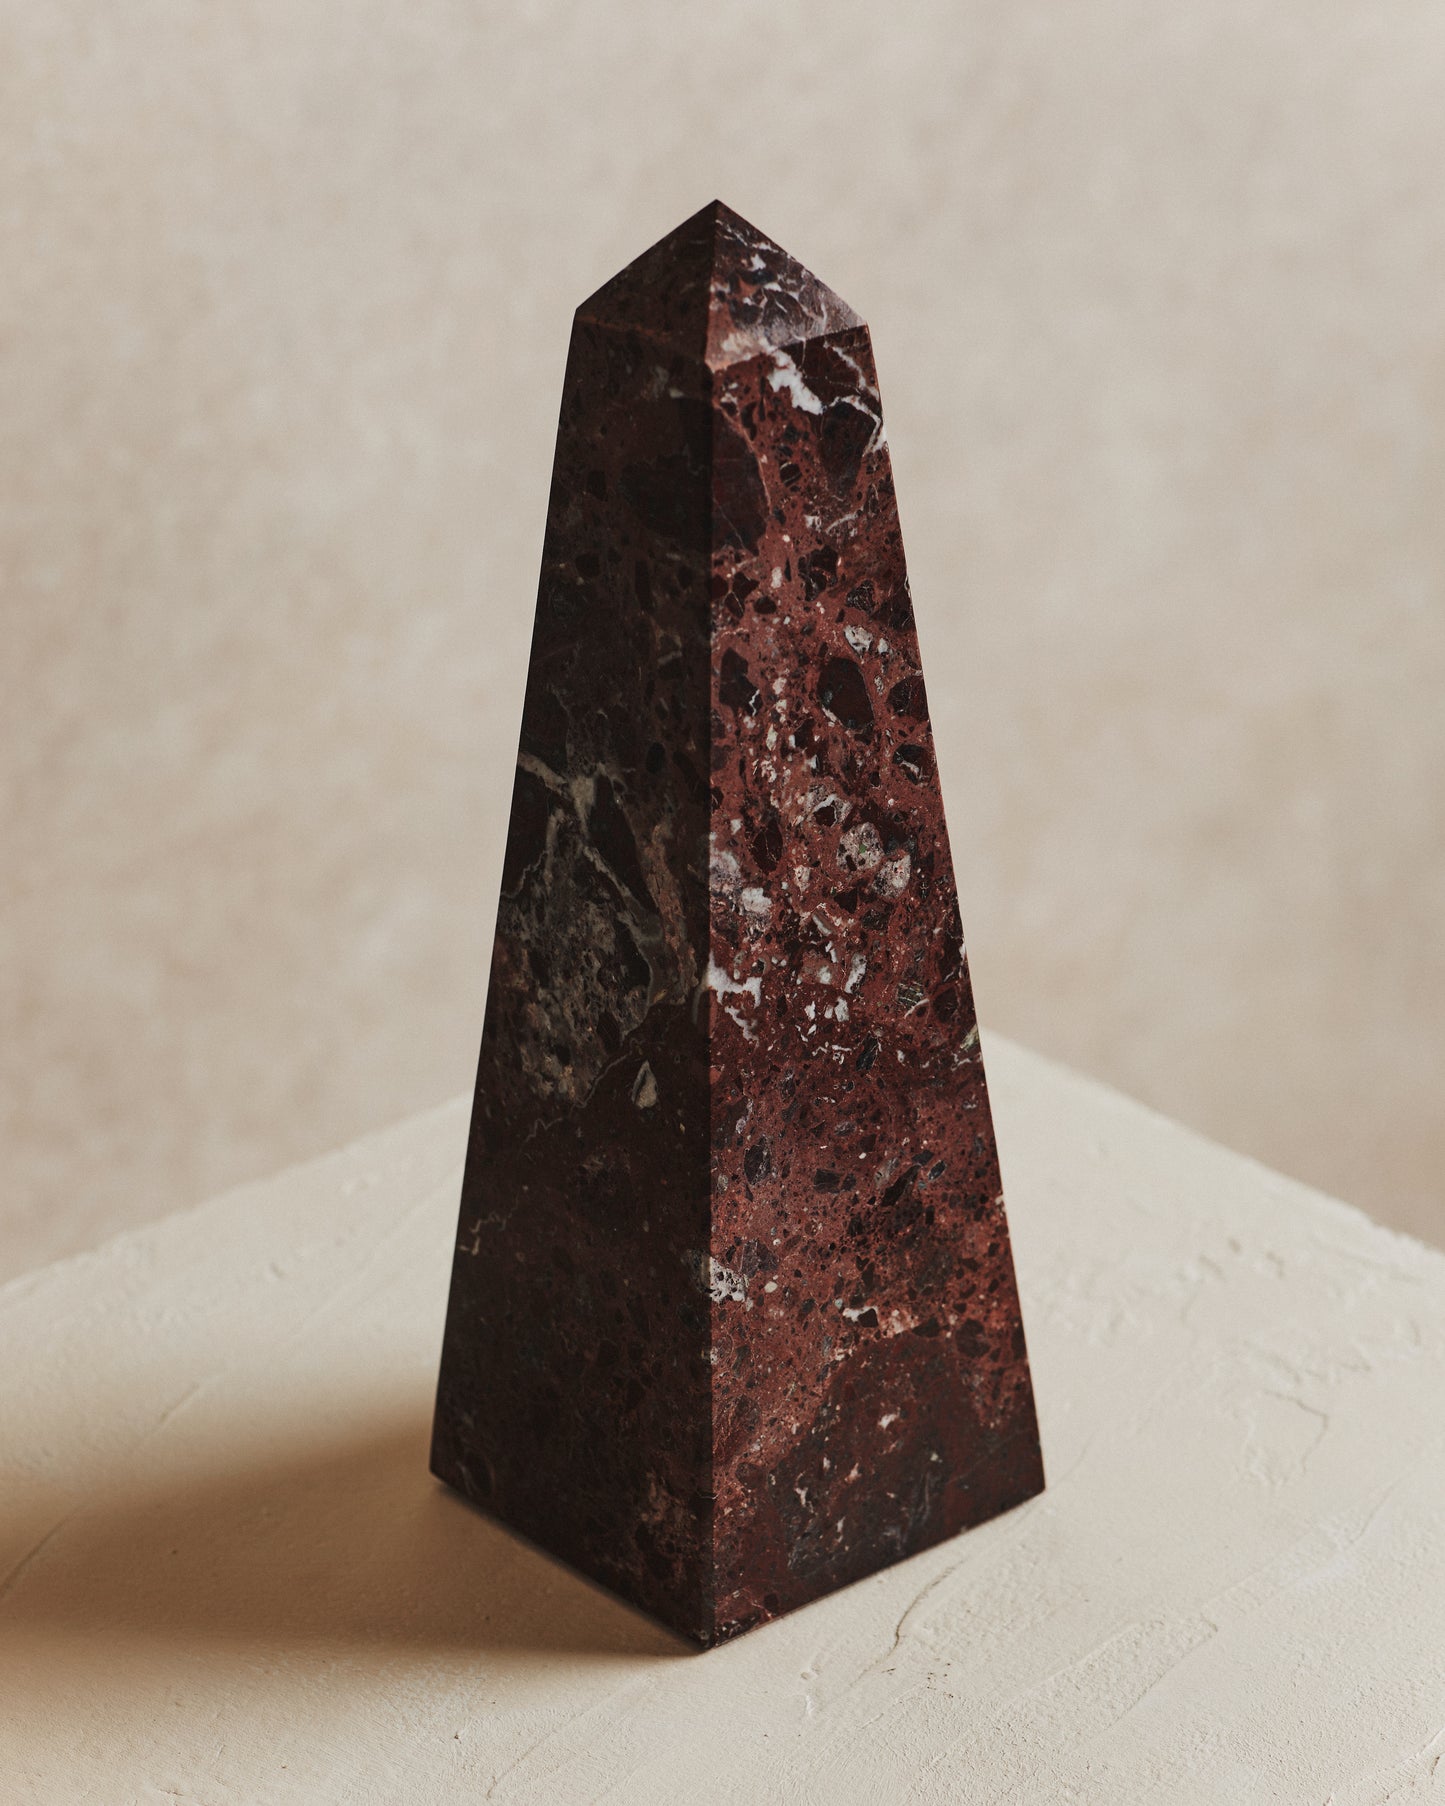 Noble Small Marble Obelisk in Wine